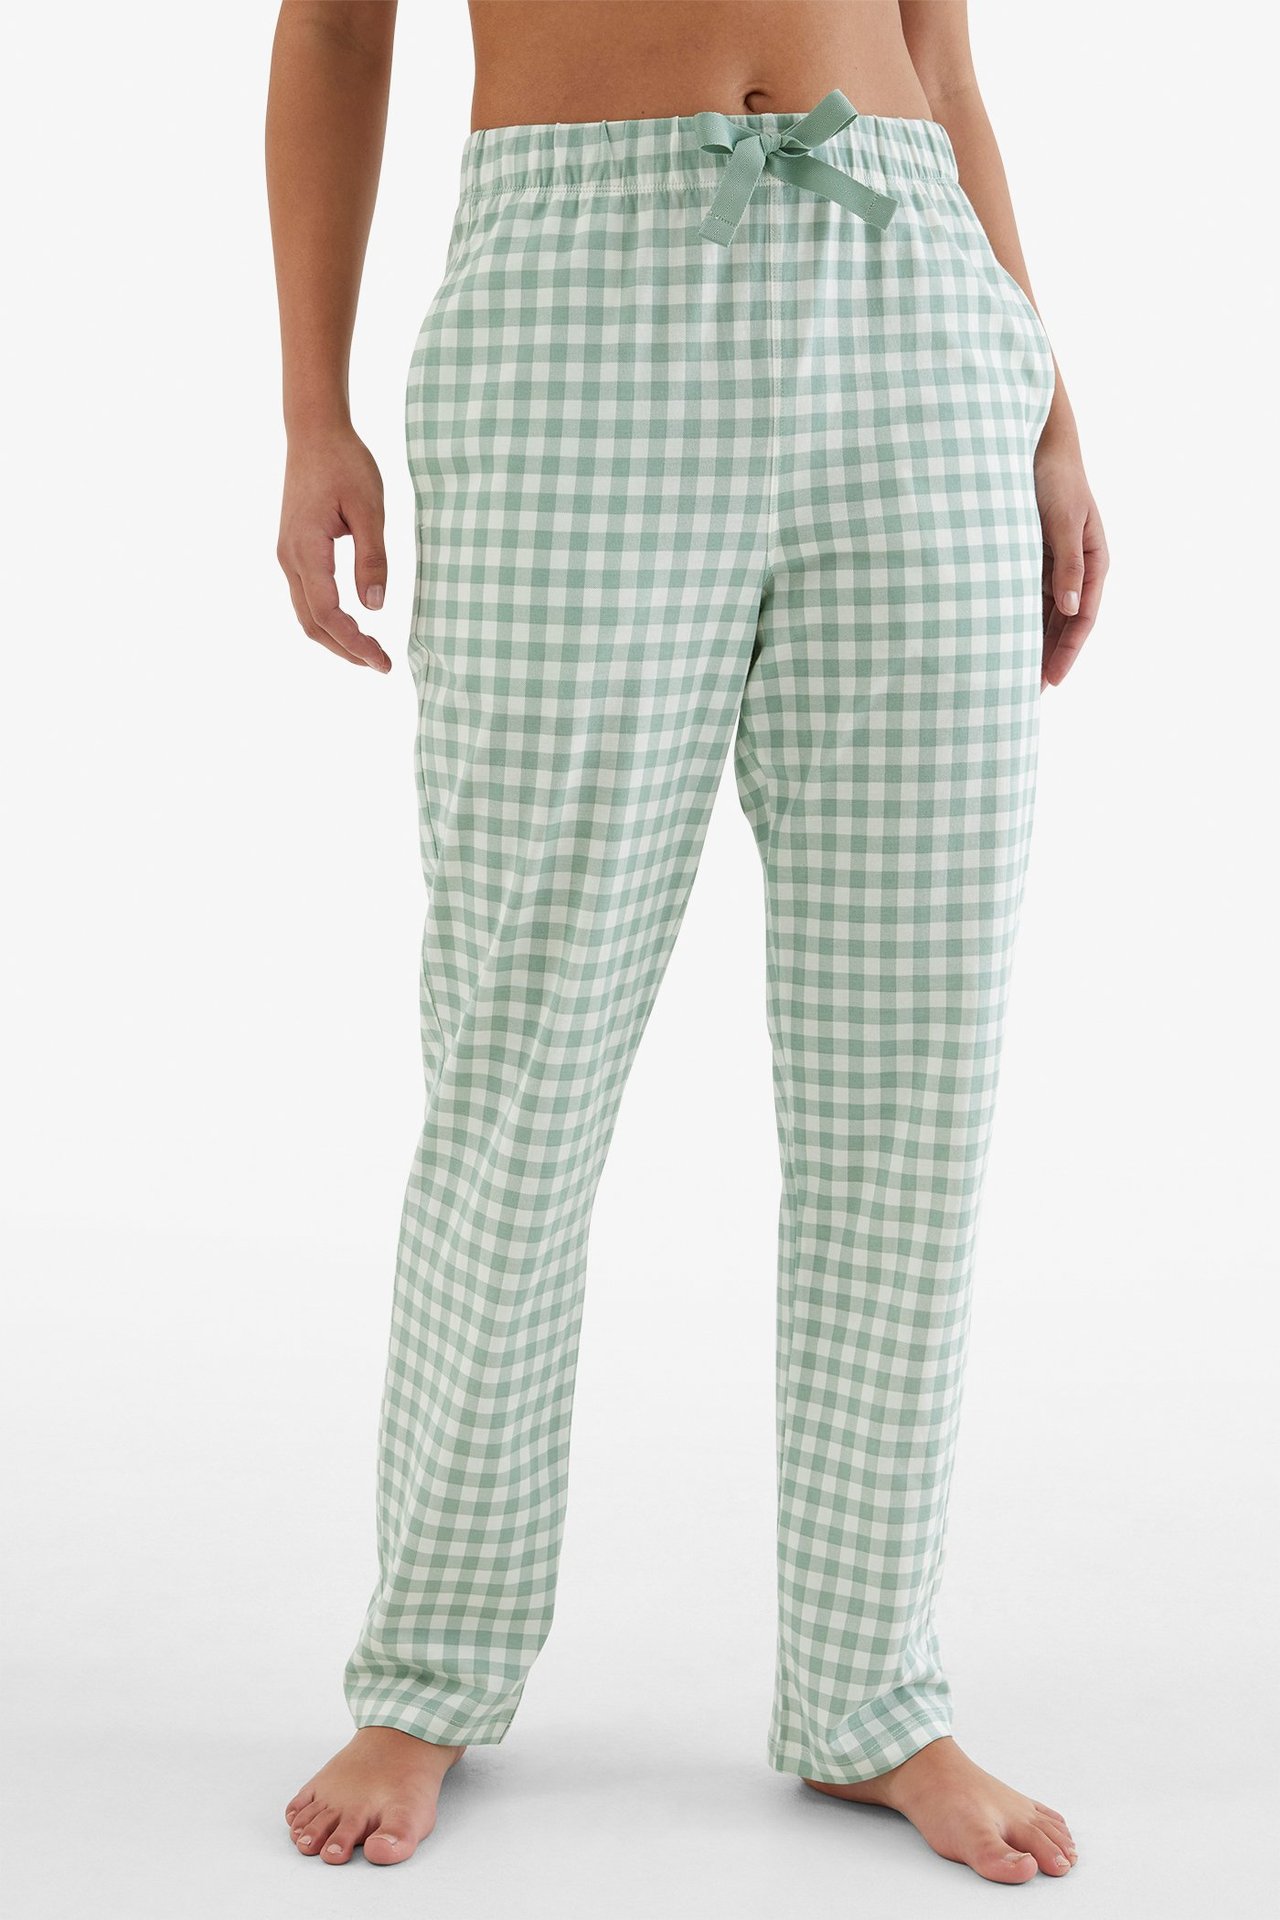 Pyjamasbukse Grønn - null - 3